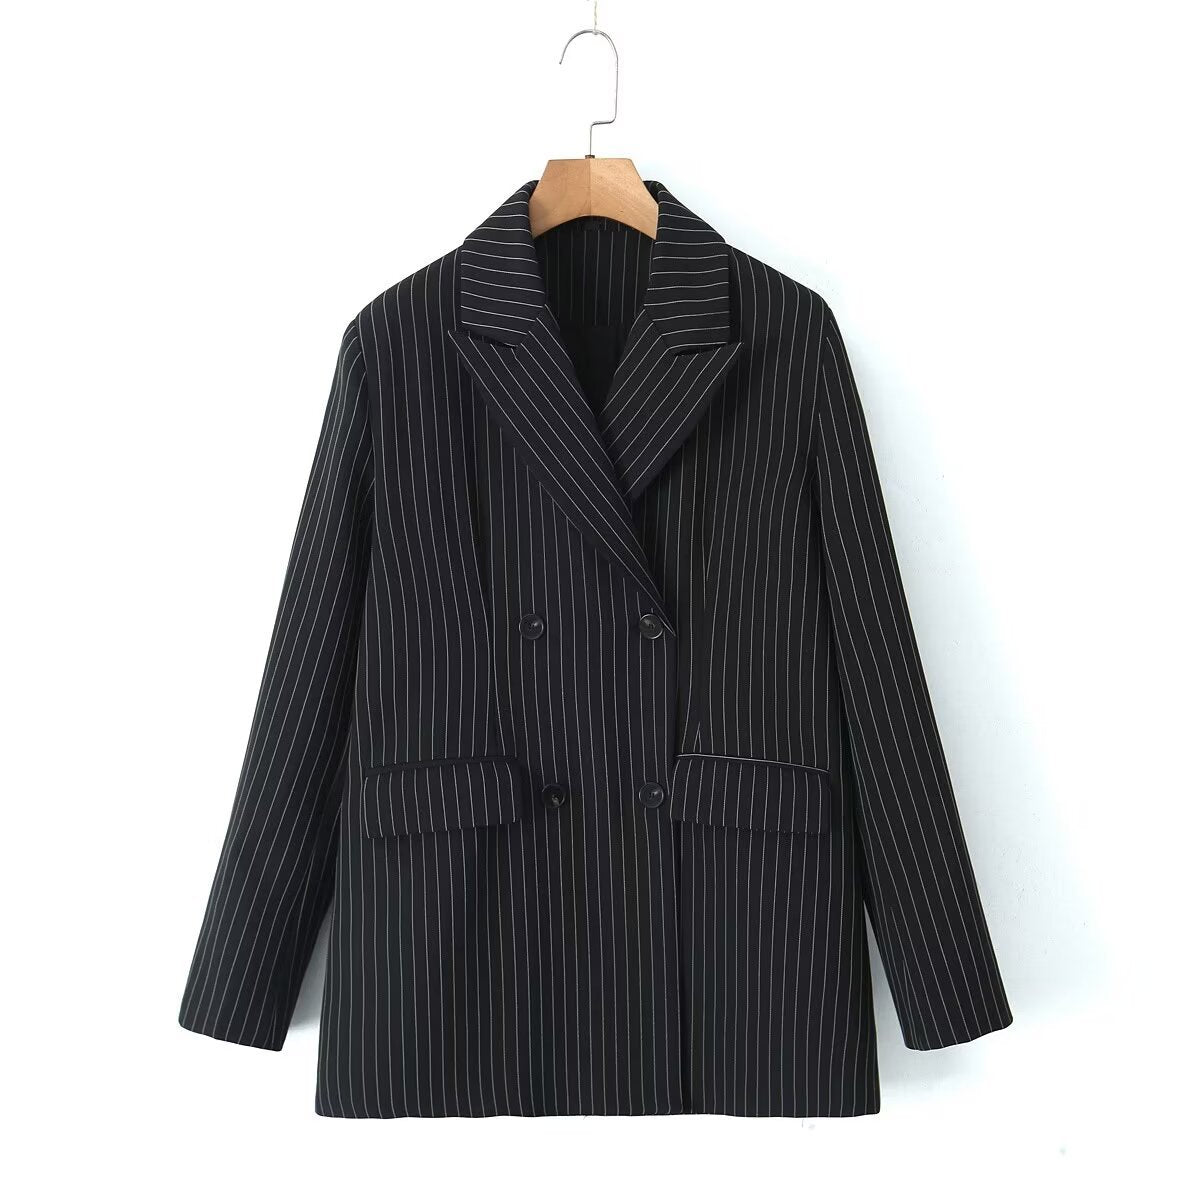 Spring Vertical Striped Blazer Suit Vest Bell Bottom Pants Suit